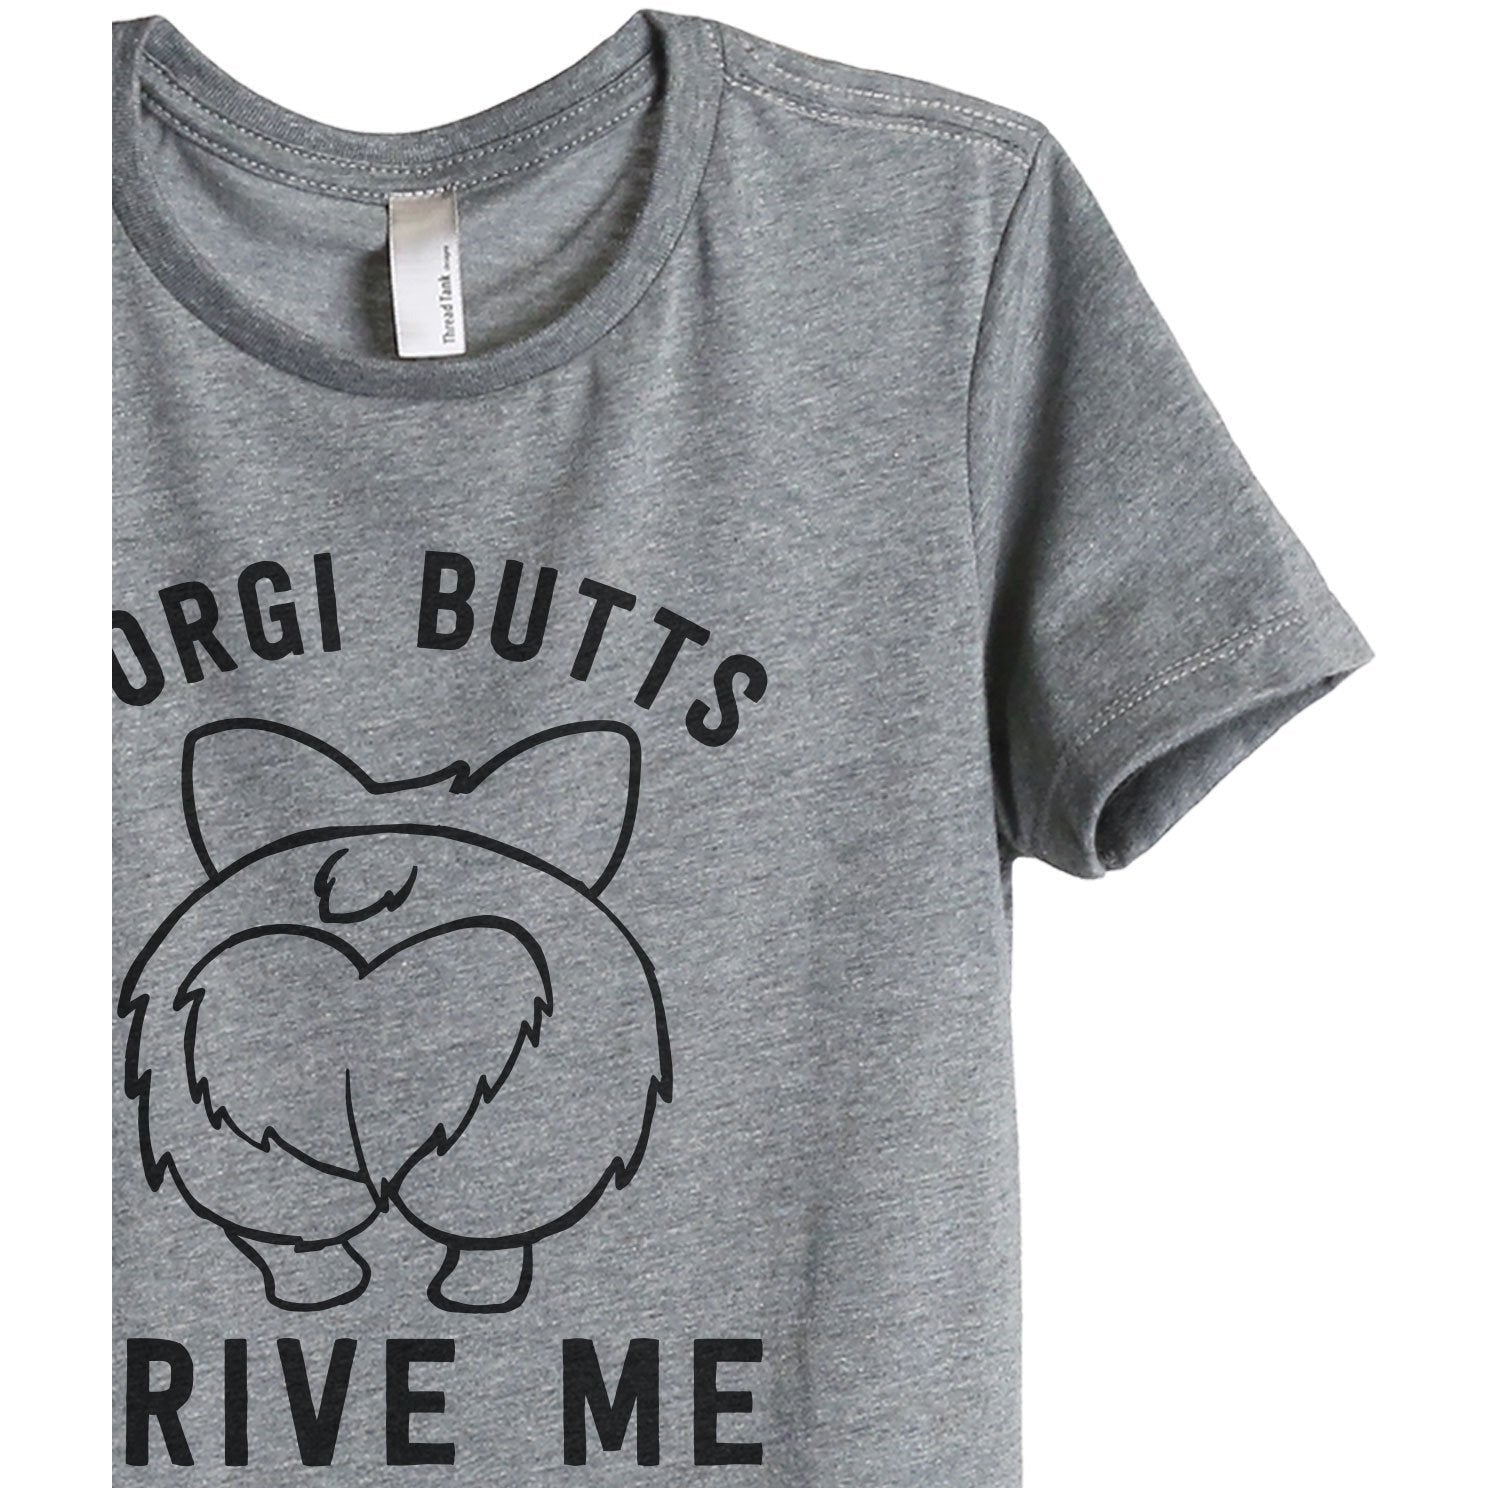 Corgi Butts Drive Me Nutts Women's Relaxed Crewneck T-Shirt Top Tee Heather Grey